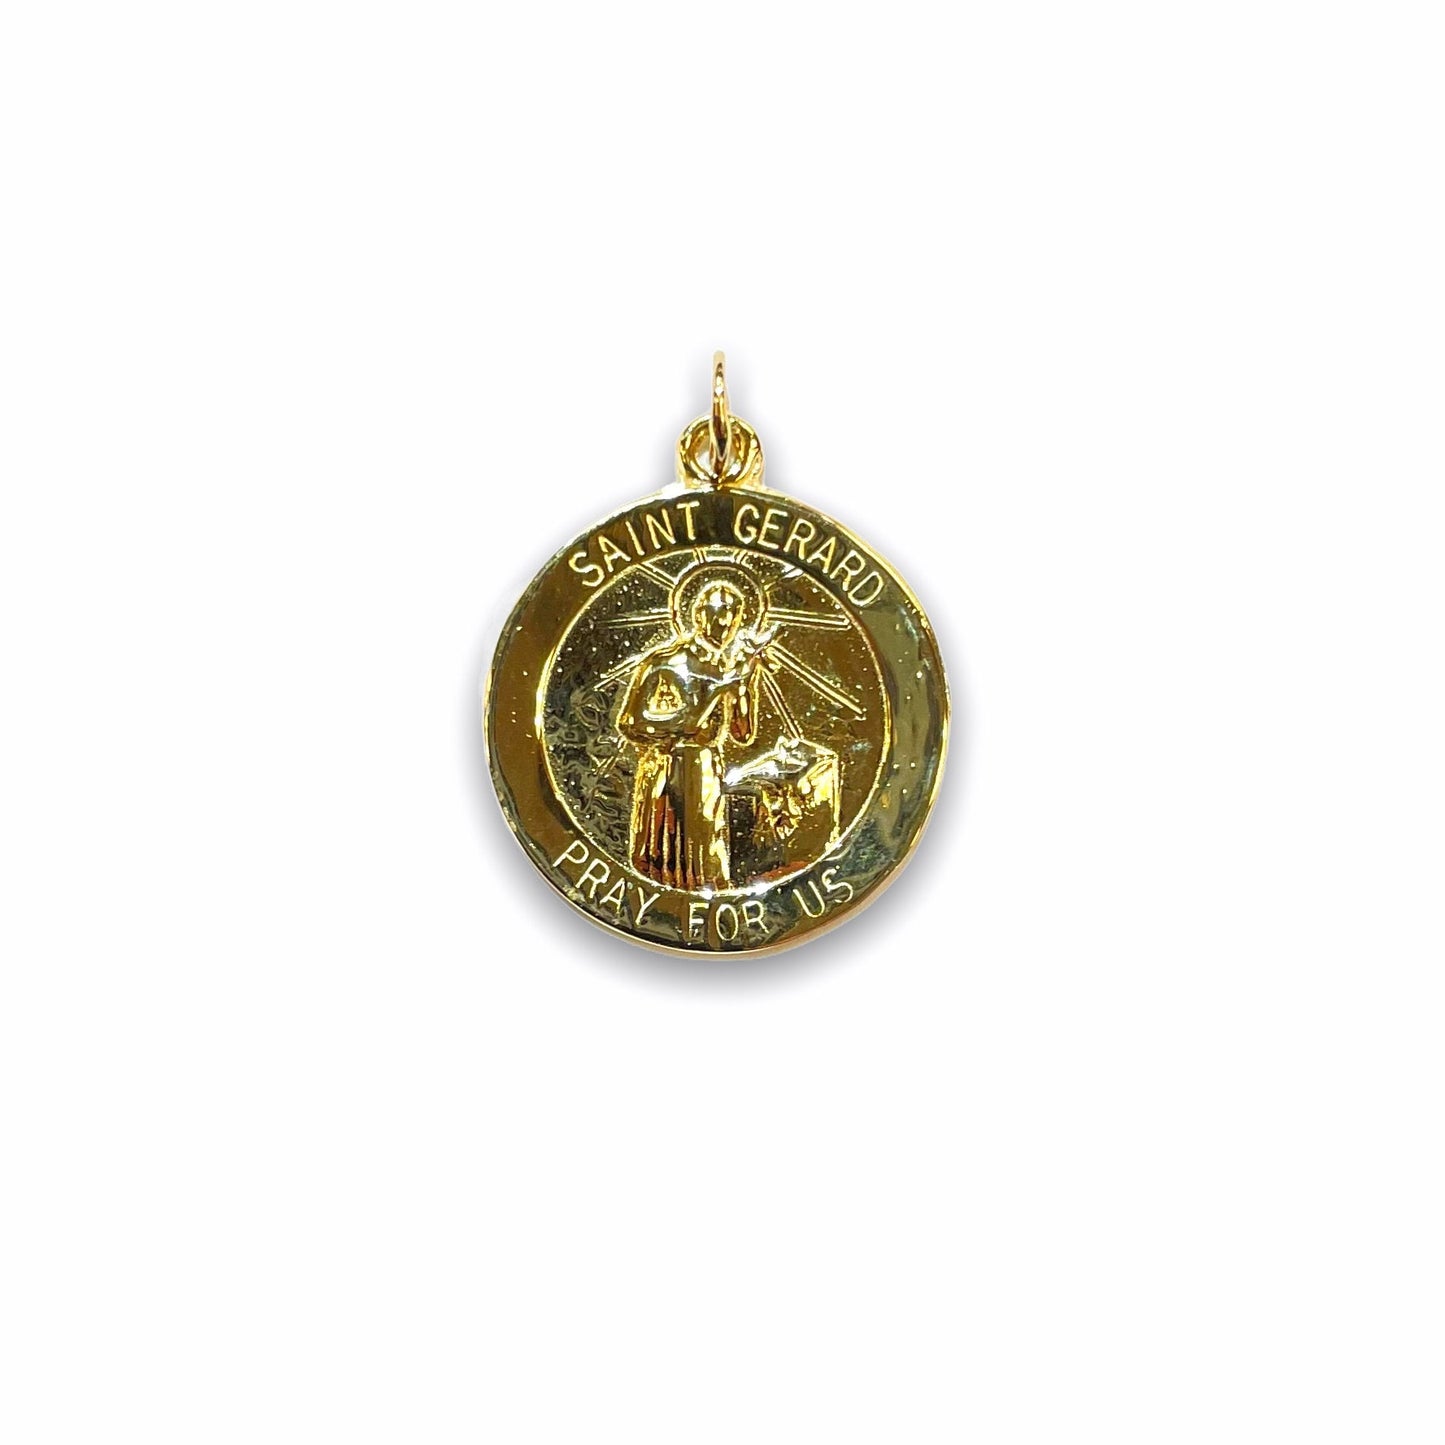 Saint Gerard Medal